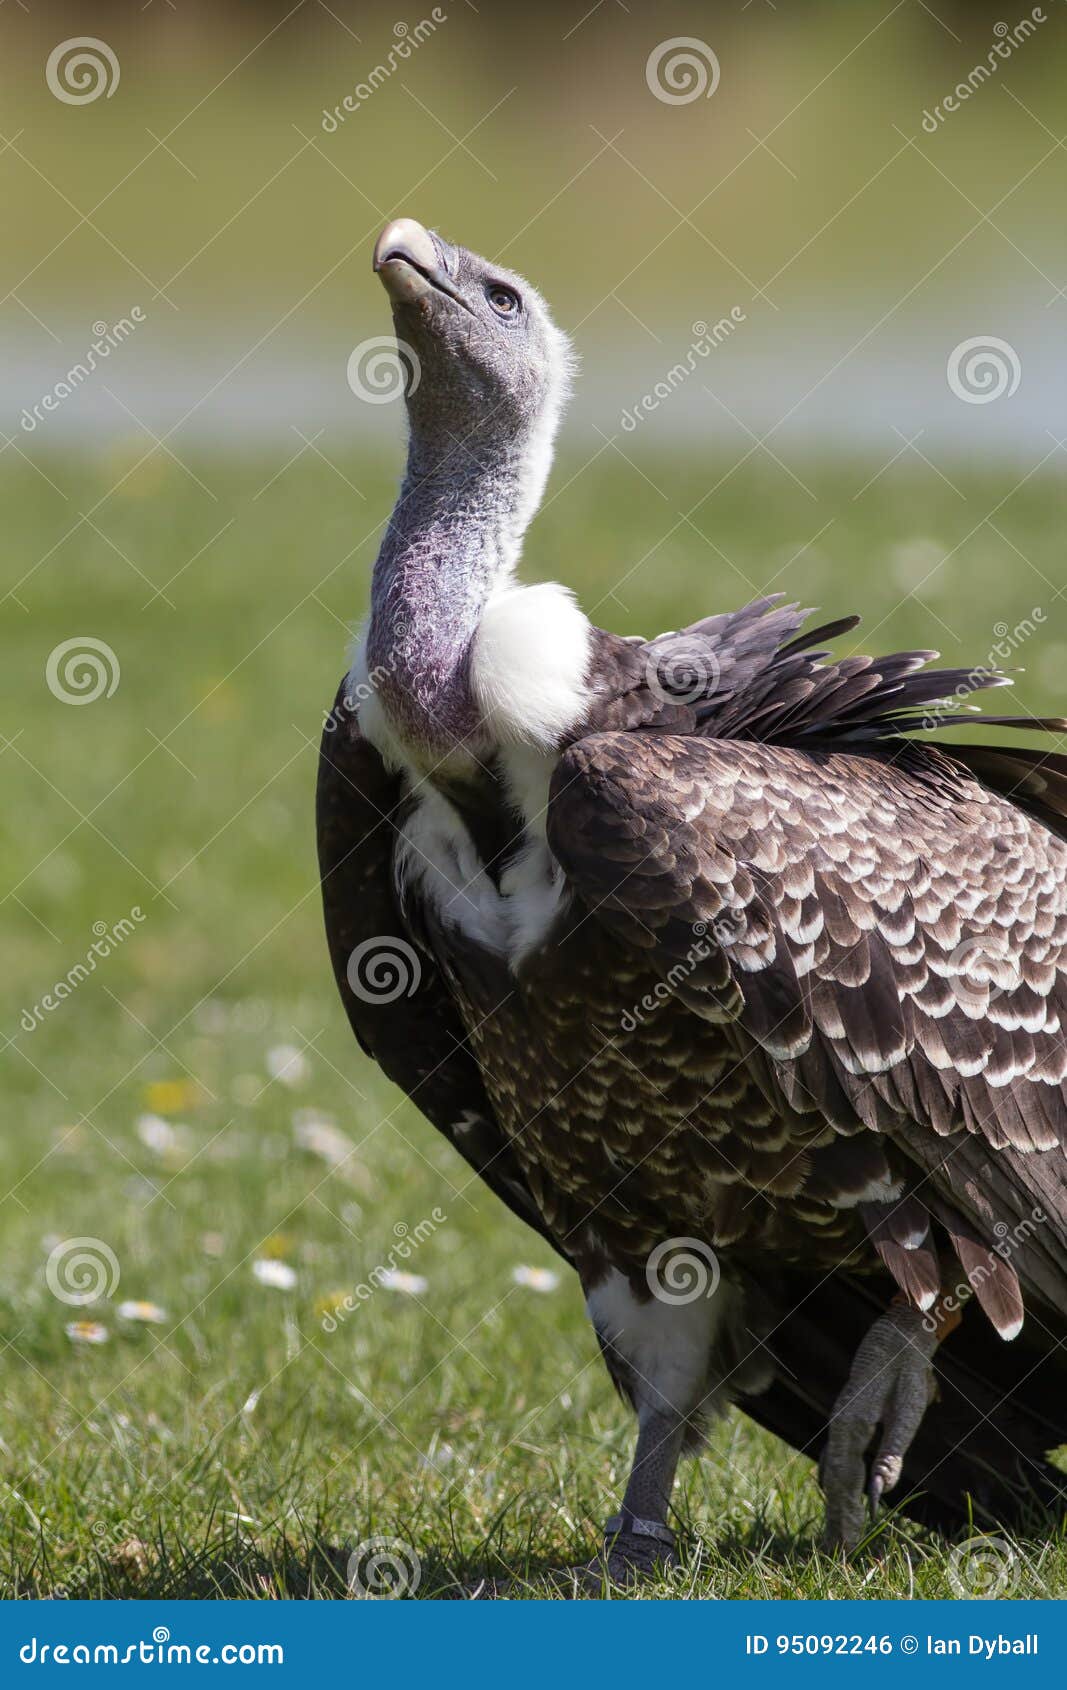 endangered species vulture looks up in hope. poignant wildlife t